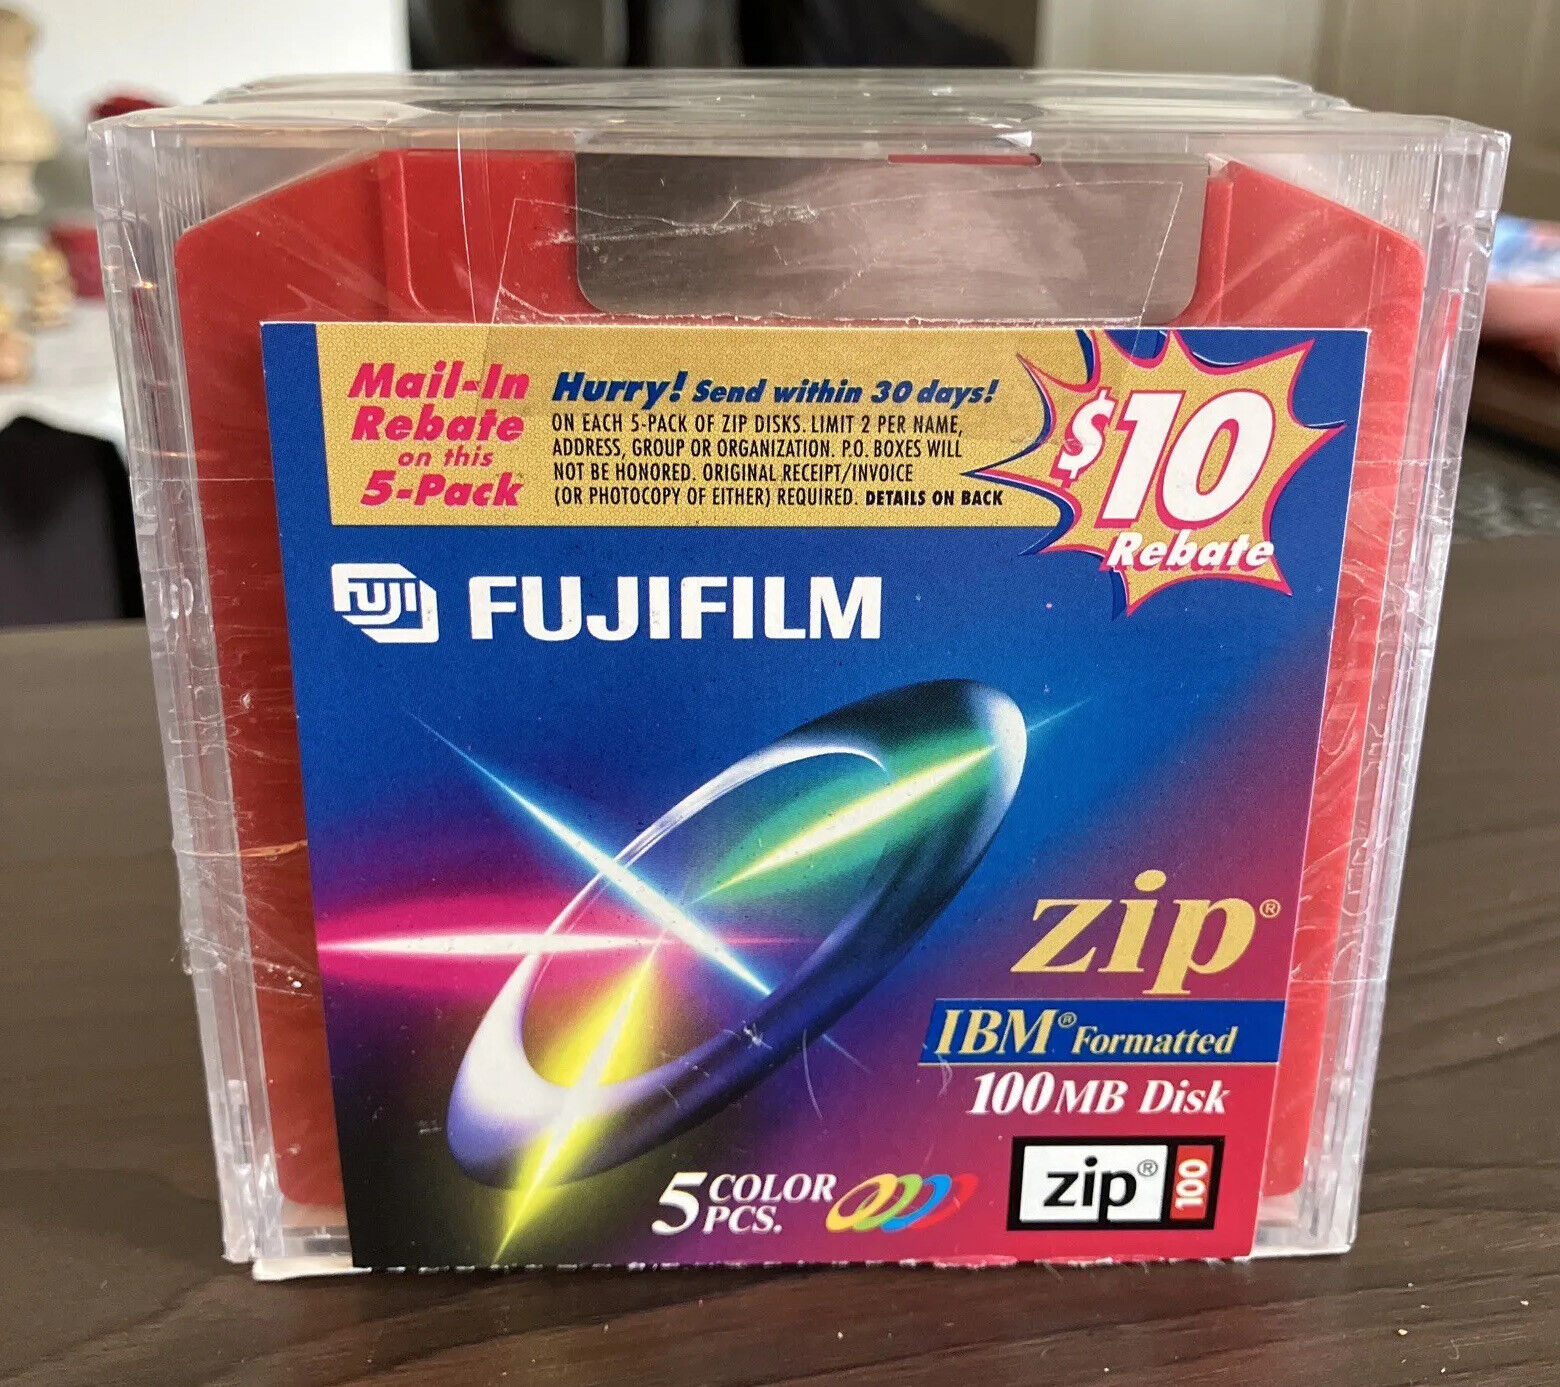 Fujifilm Zip IBM Formatted 100 MB Disk 5 Color Pks New In Wrap 